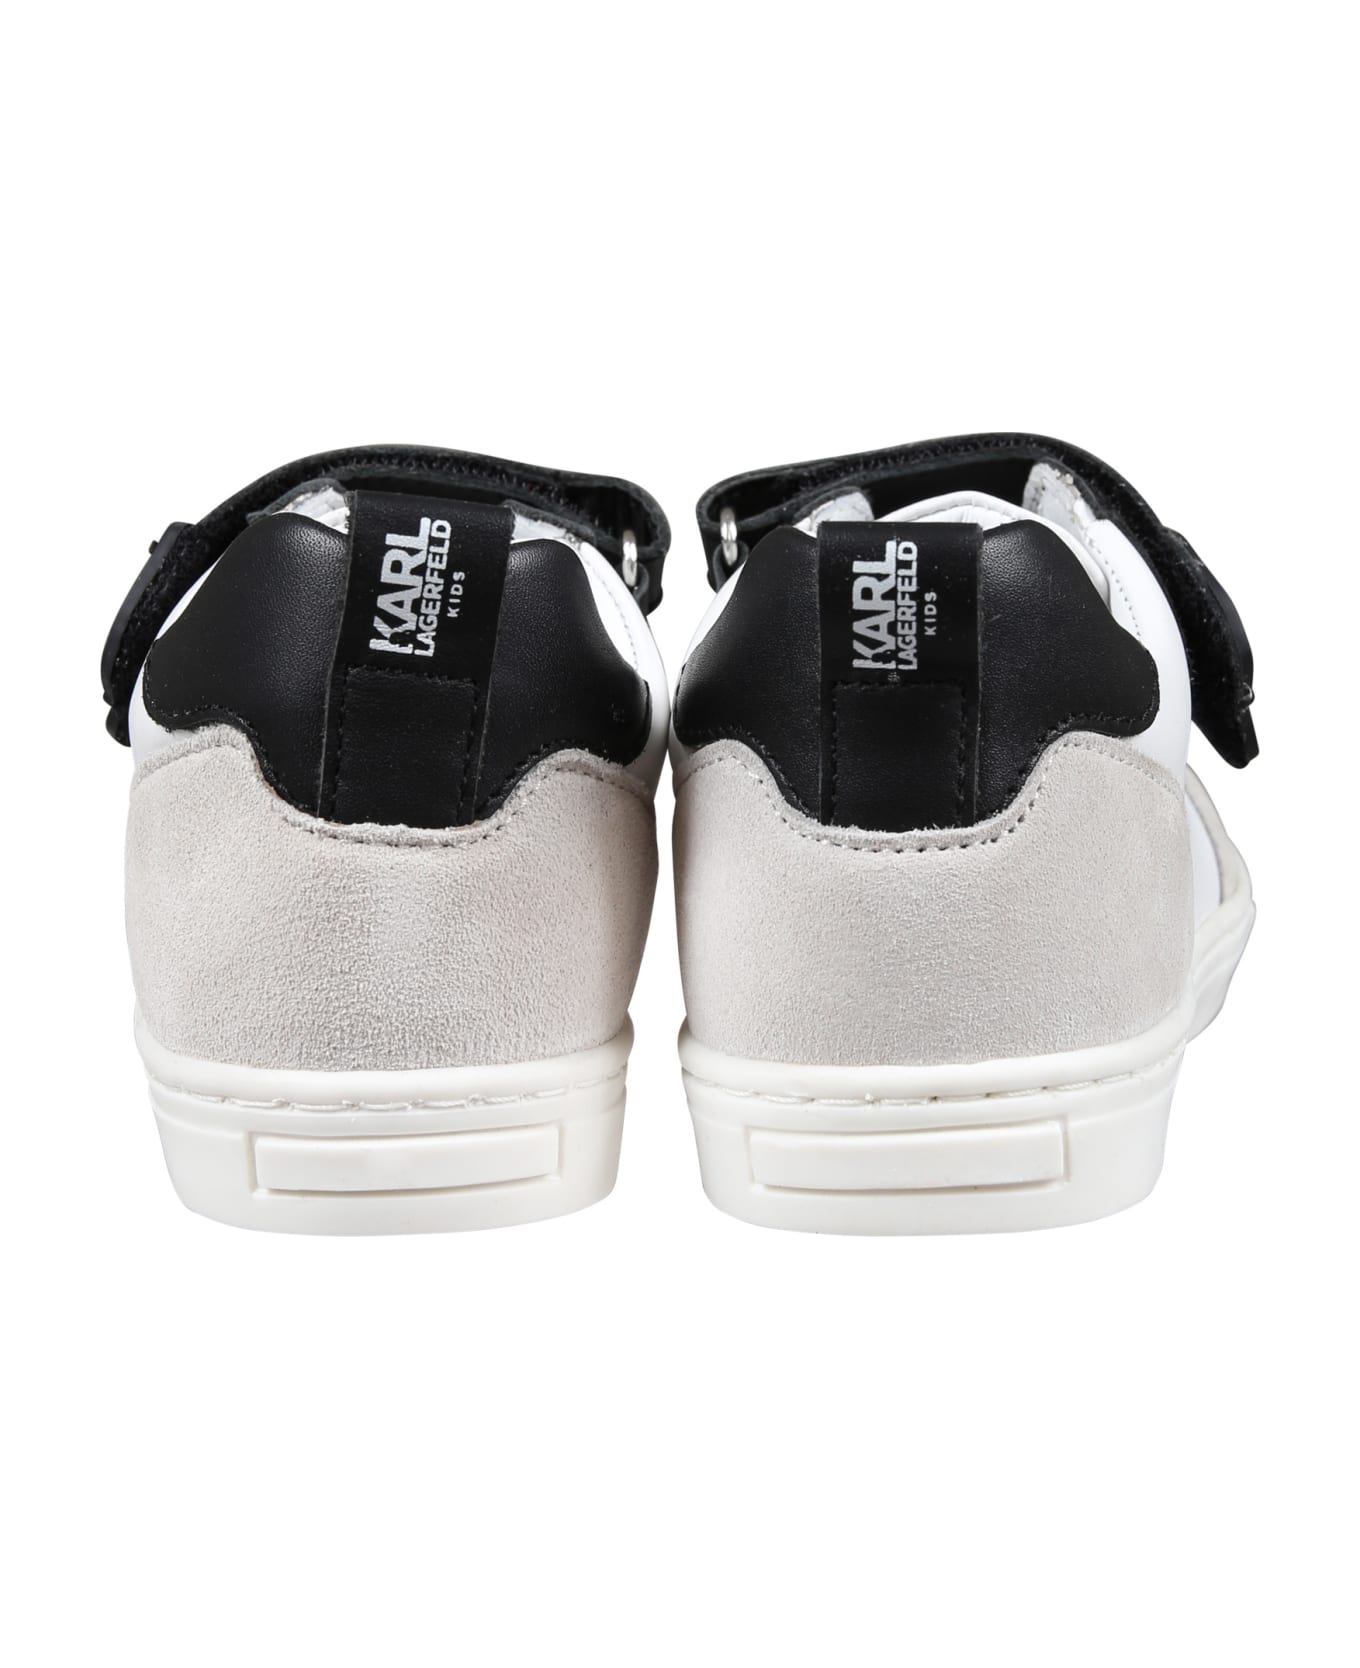 Karl Lagerfeld Kids White Low Sneakers For Kids - White